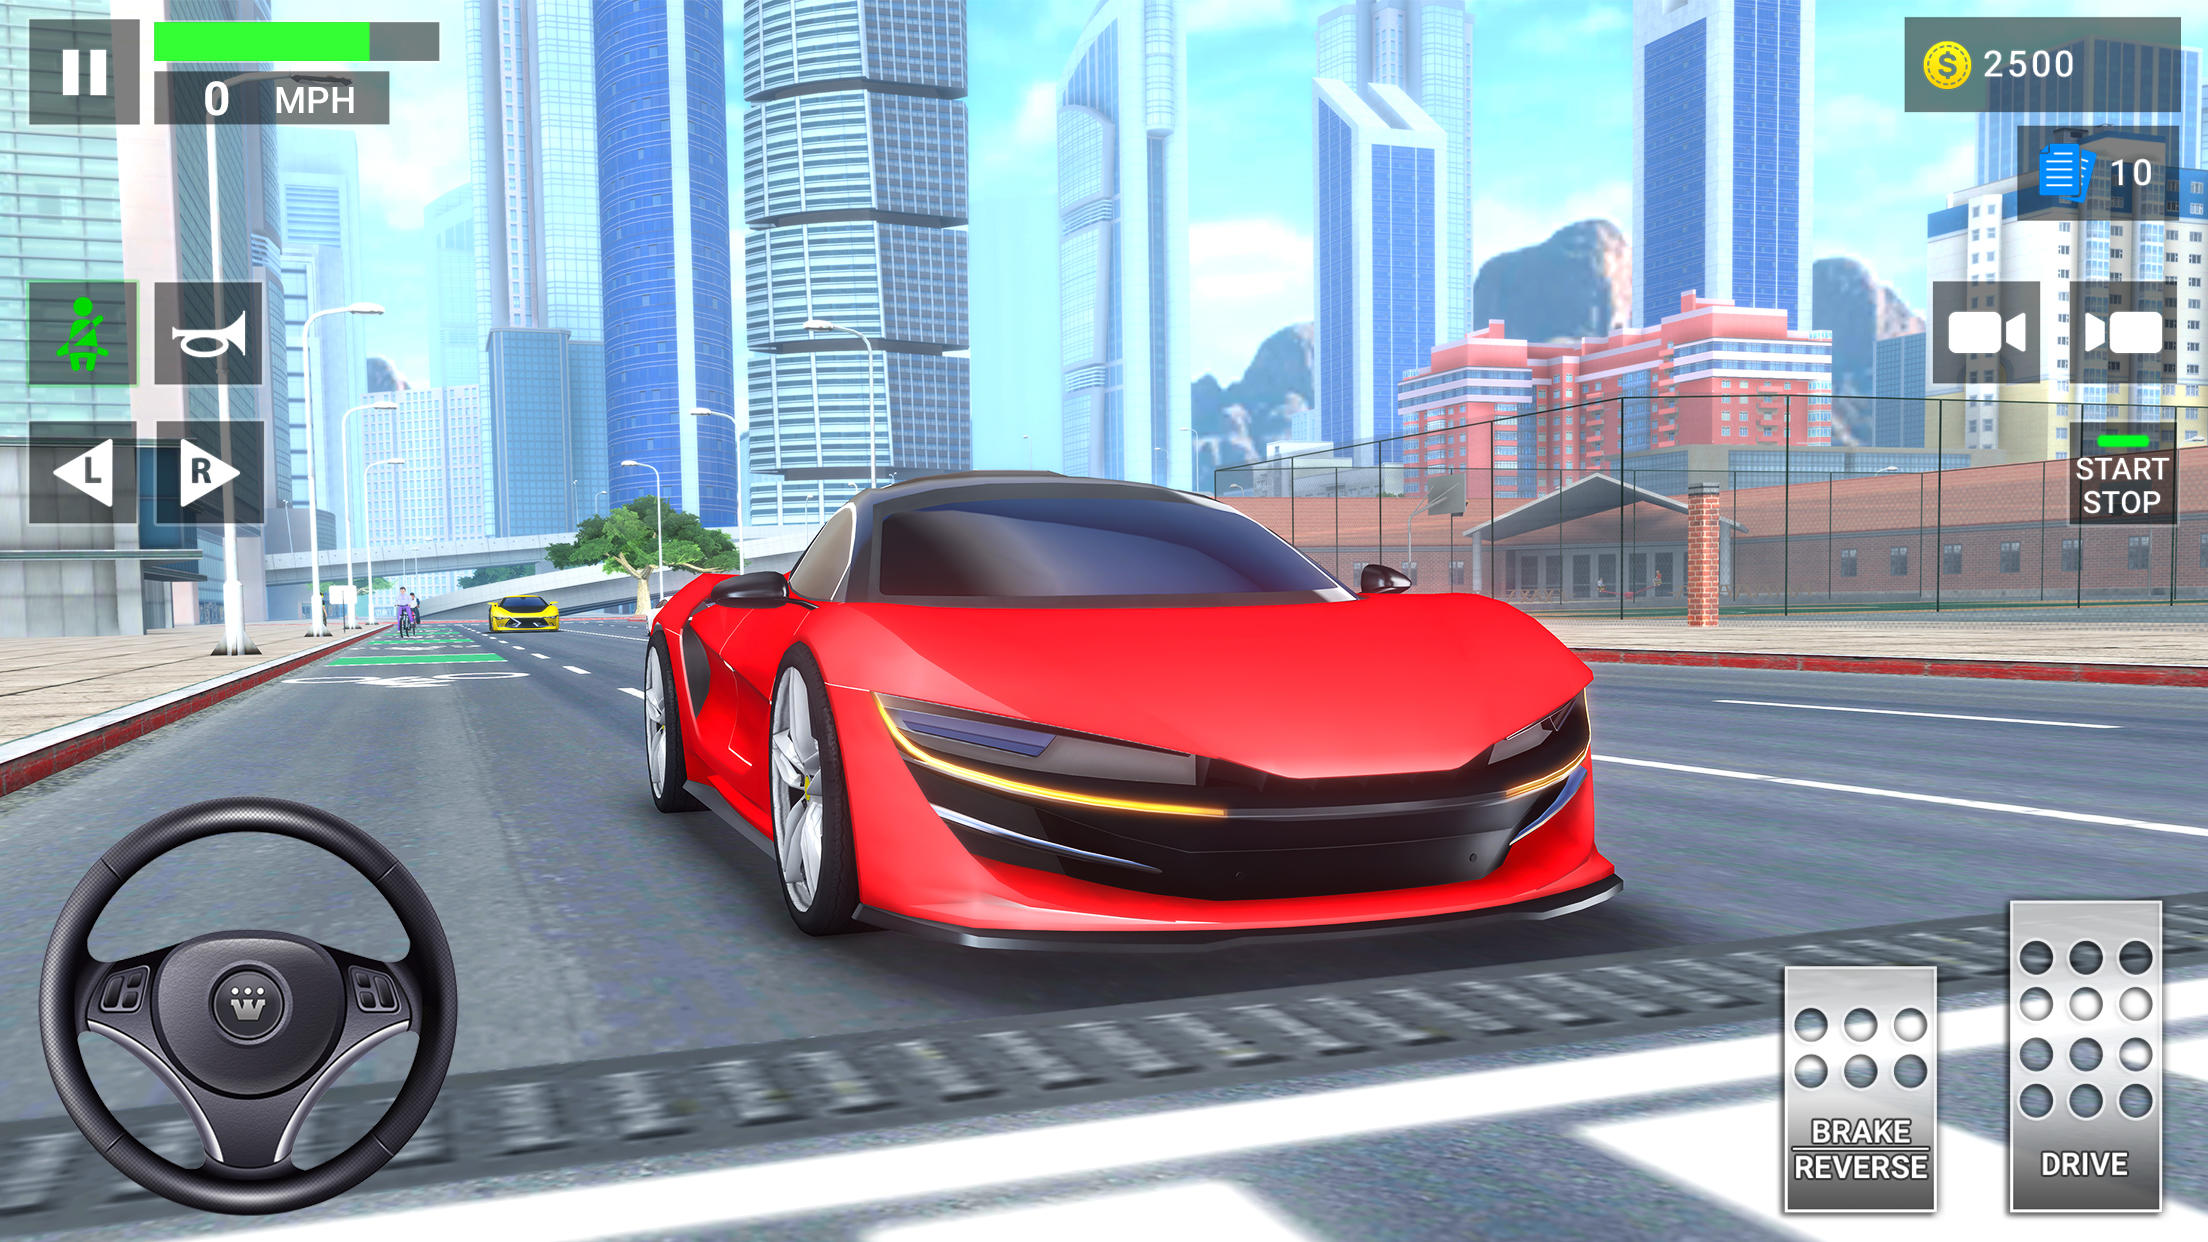 Screenshot 1 of Driving Academy 2 Car Games 3.8